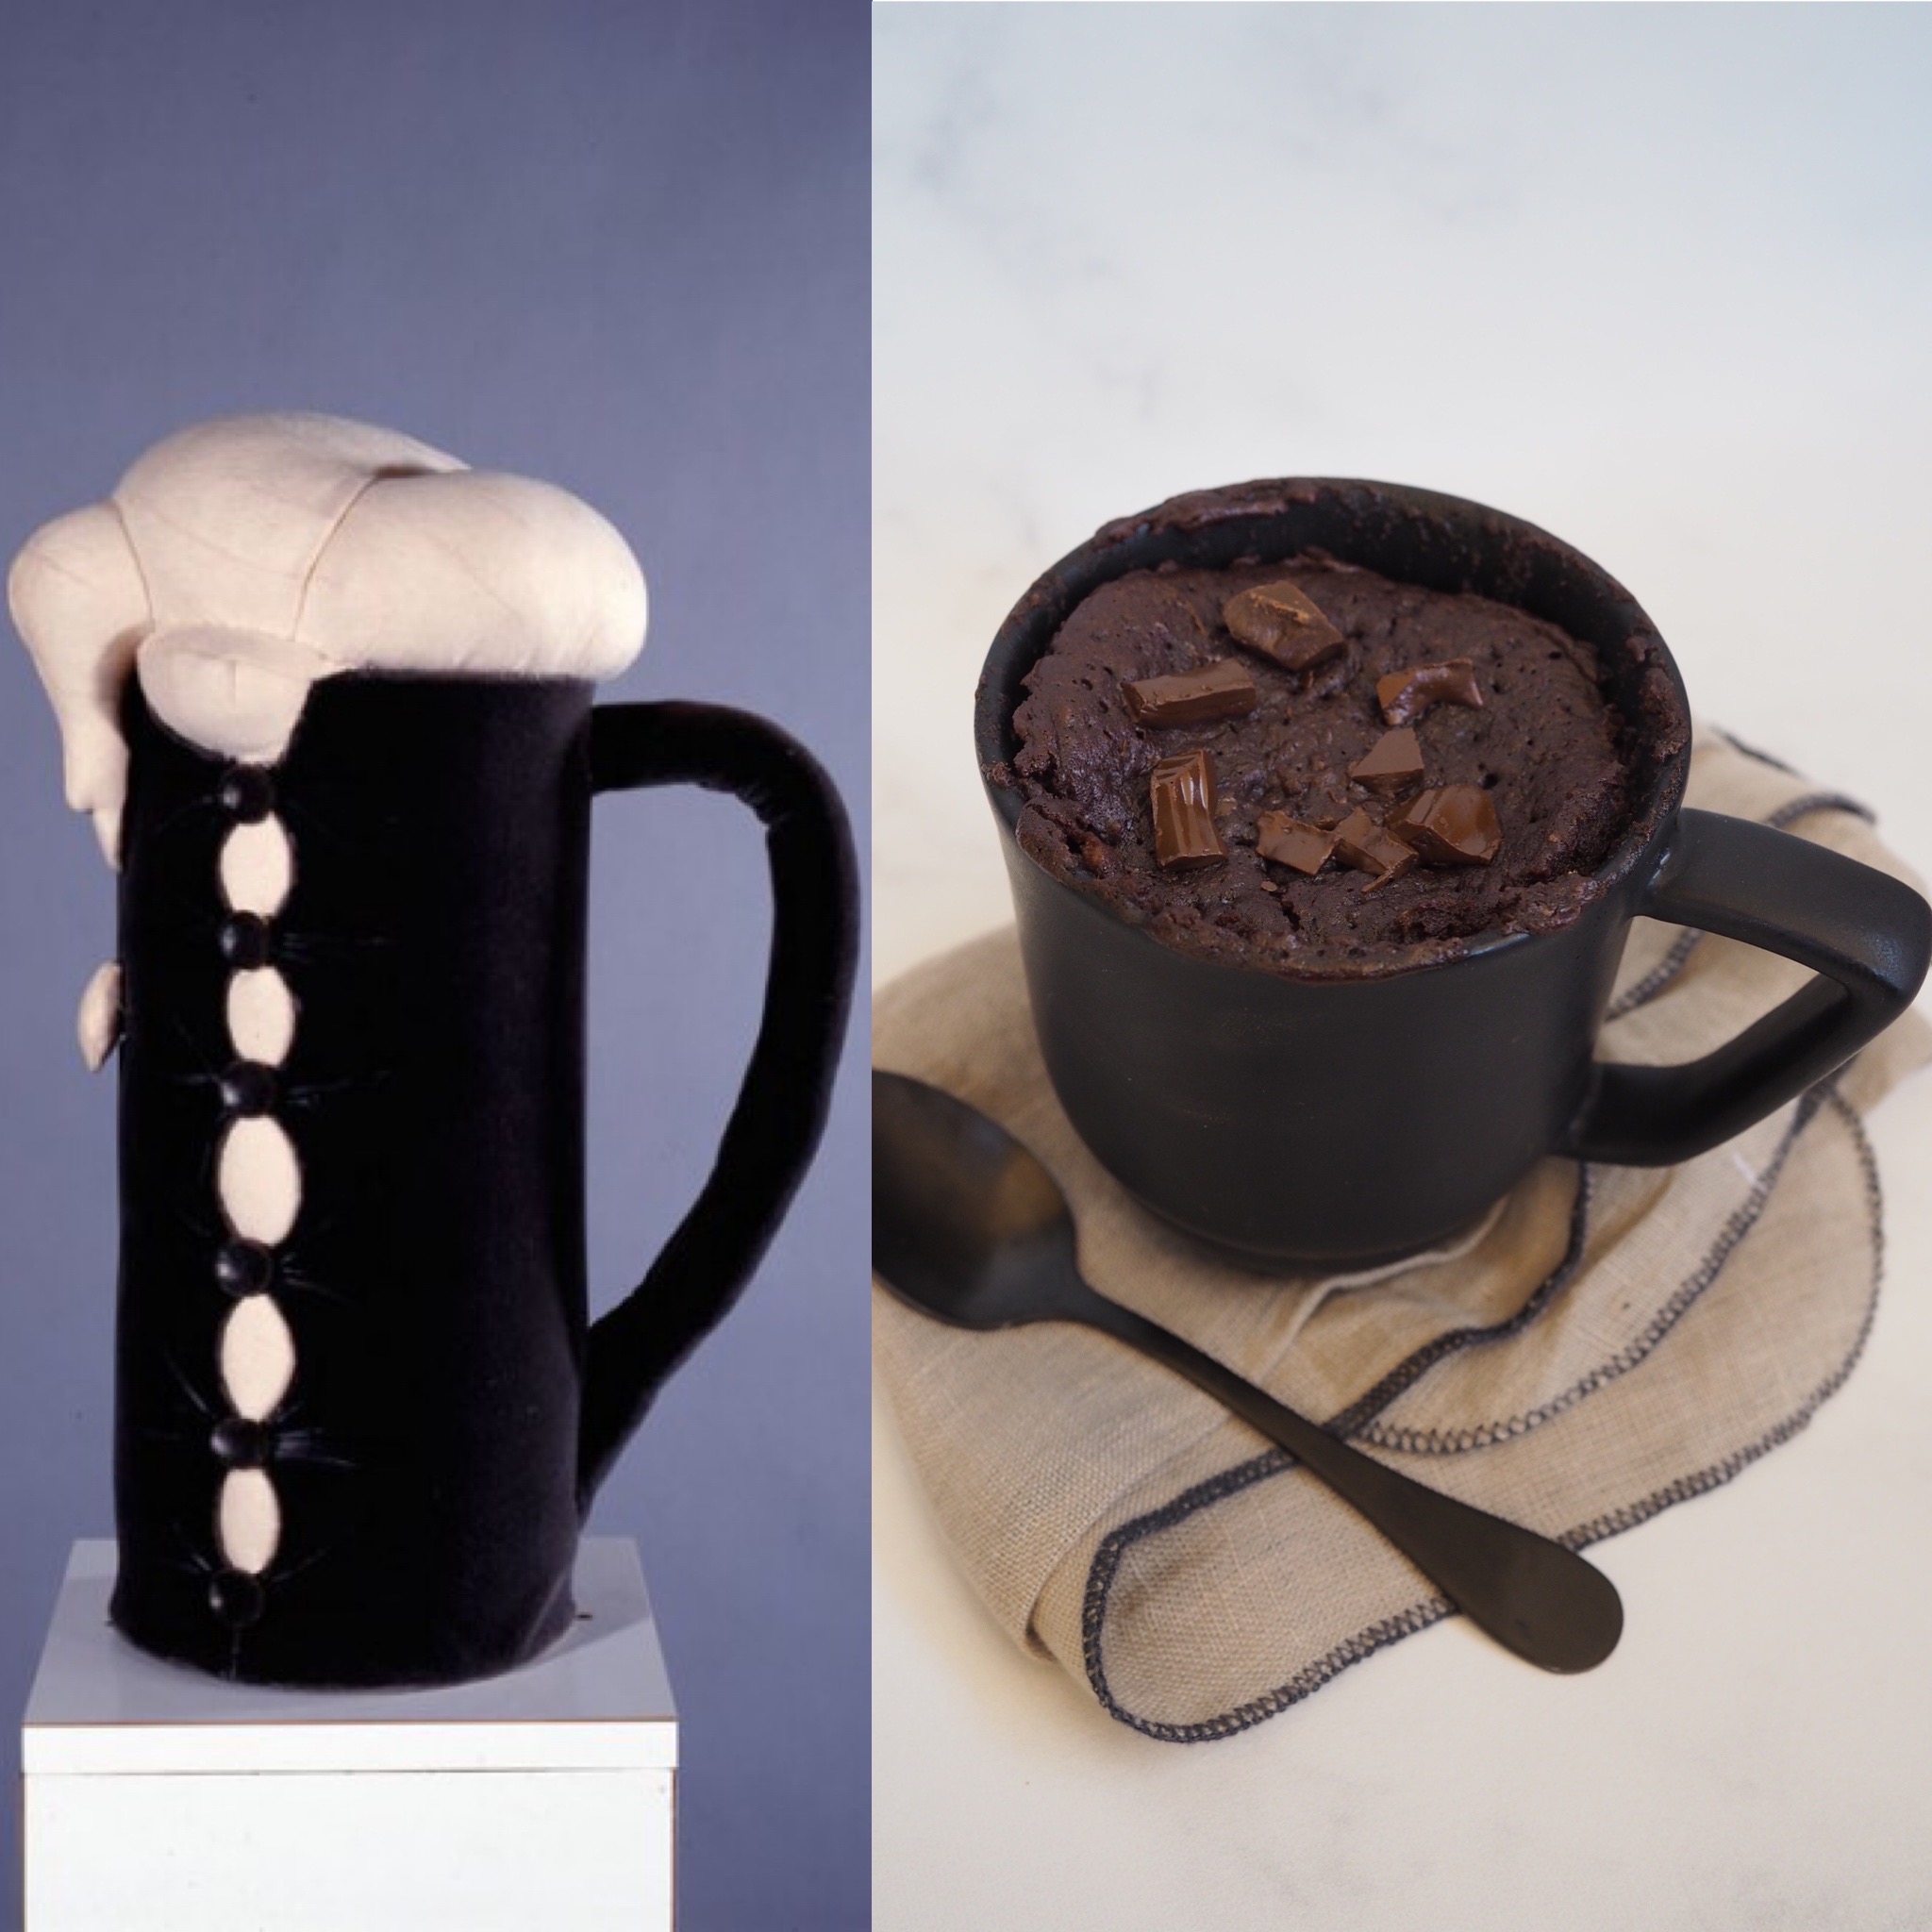 Dorothea Tanning, Don Juan’s Breakfast i el millor mug cake vegà